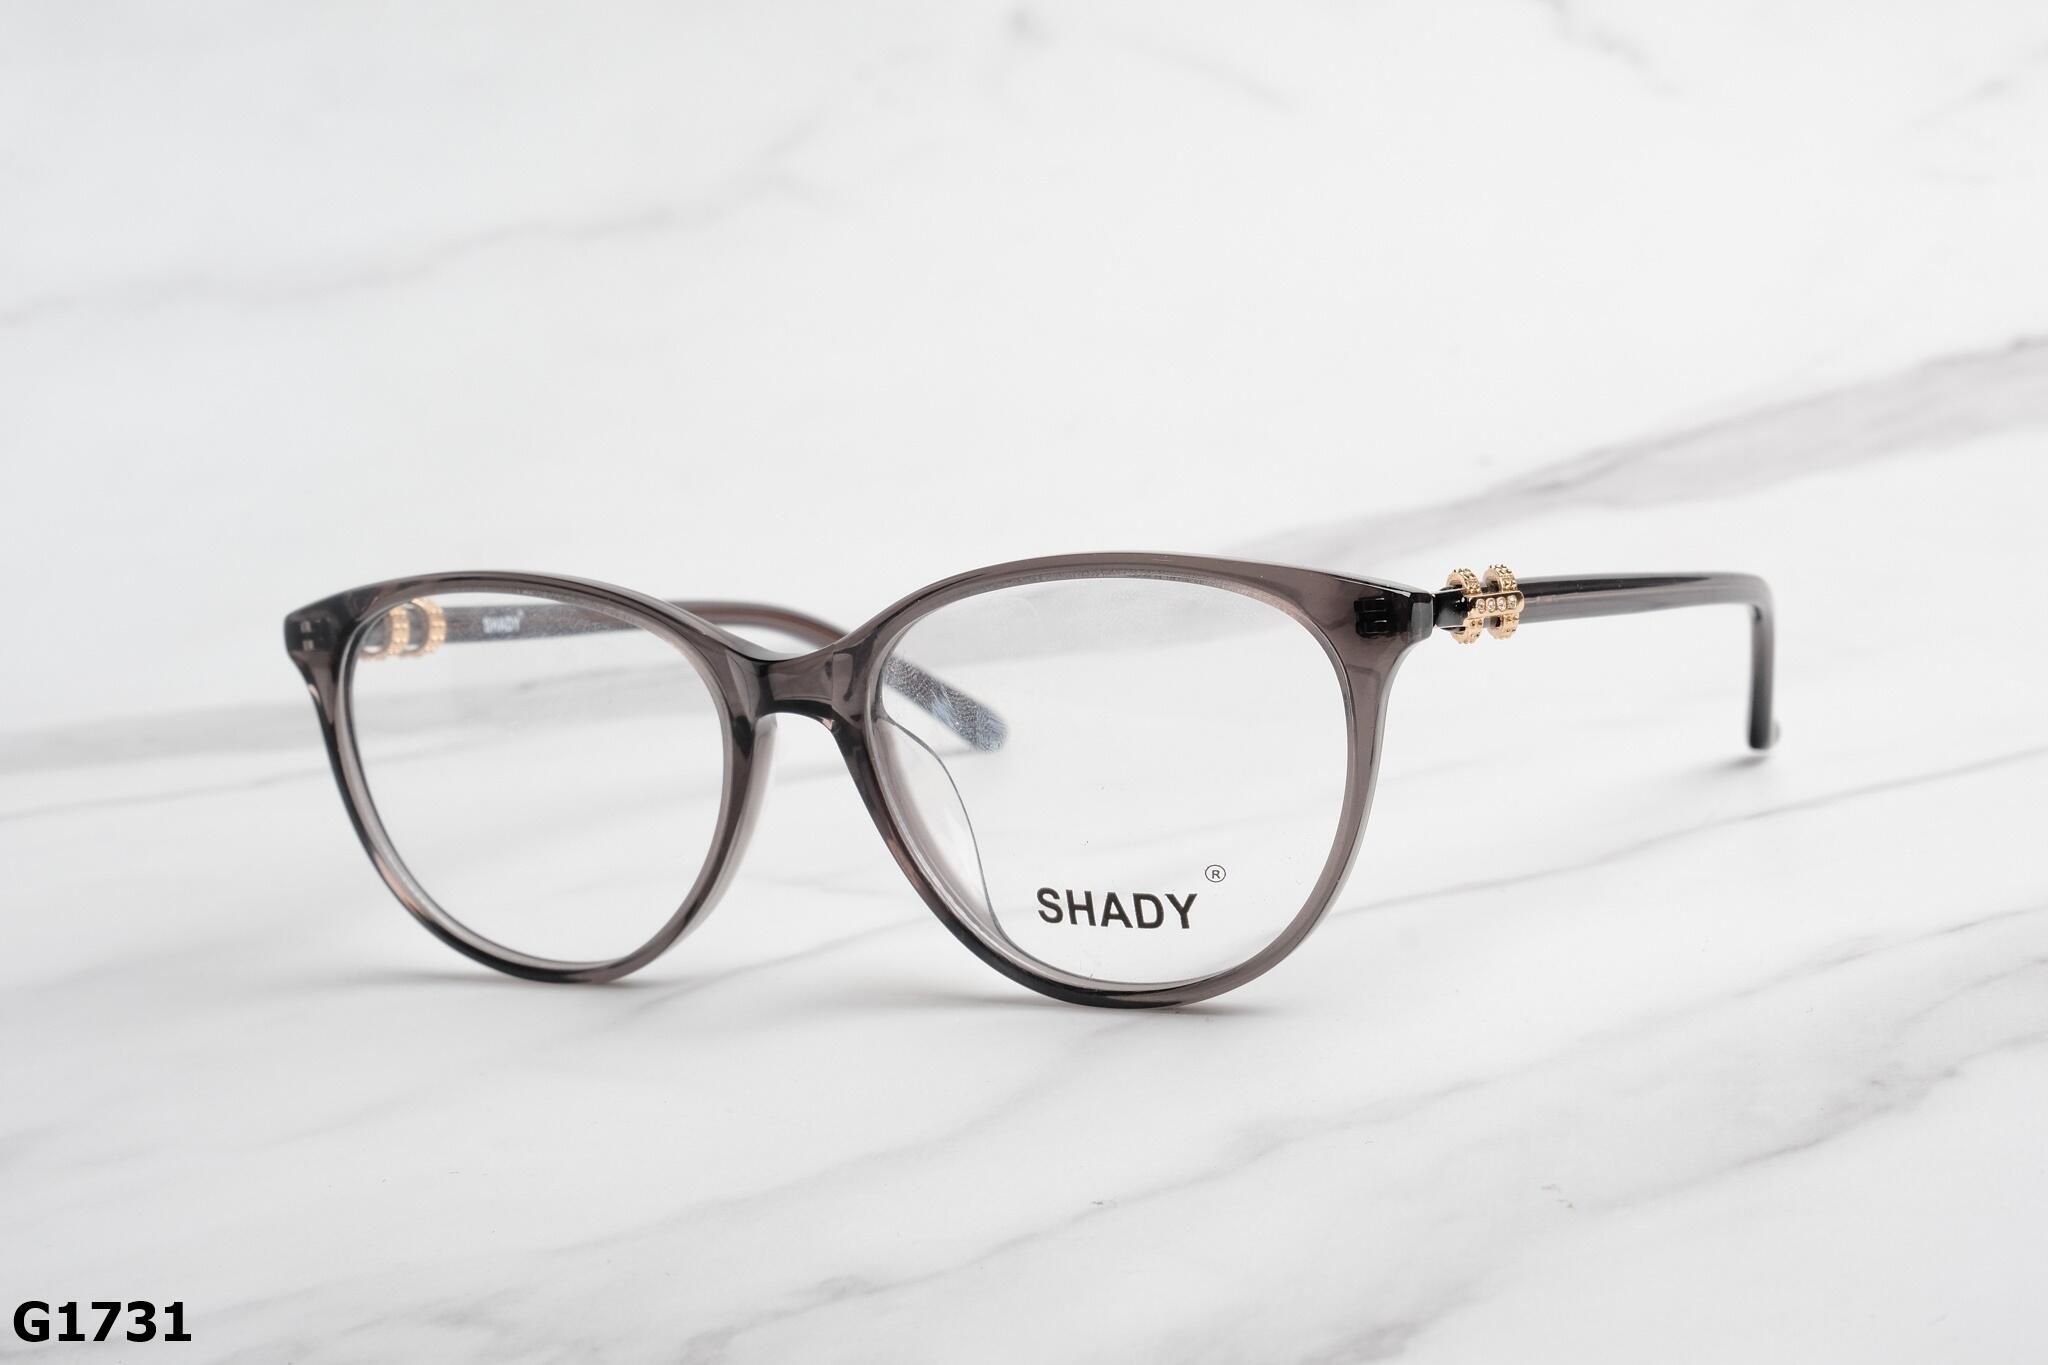  SHADY Eyewear - Glasses - G1731 